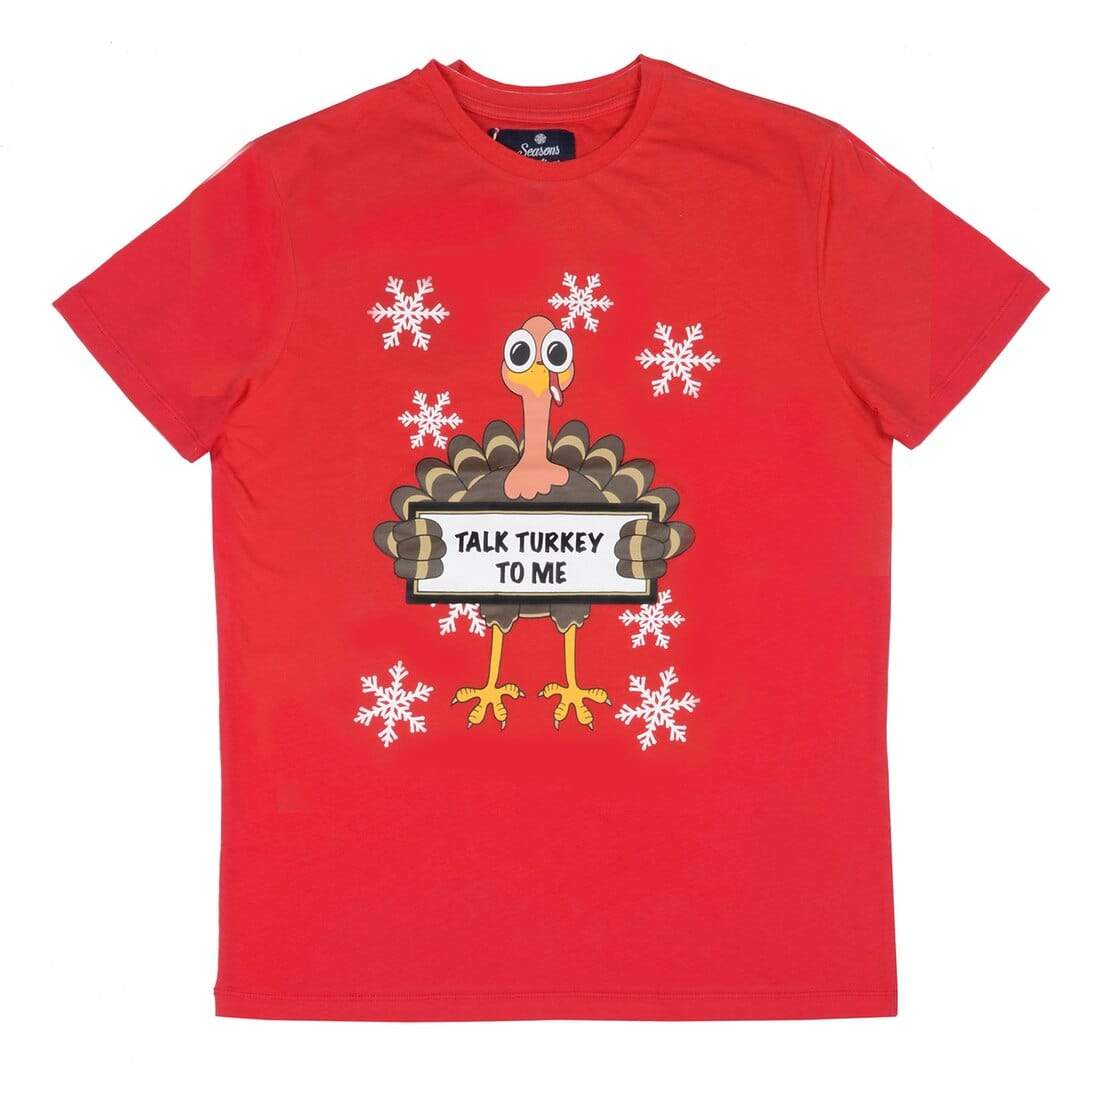 Mr Crimbo Mens Crew Red Talk Turkey Slogan Christmas T-Shirt - MrCrimbo.co.uk -VISMW06039_A - S -christmas tee